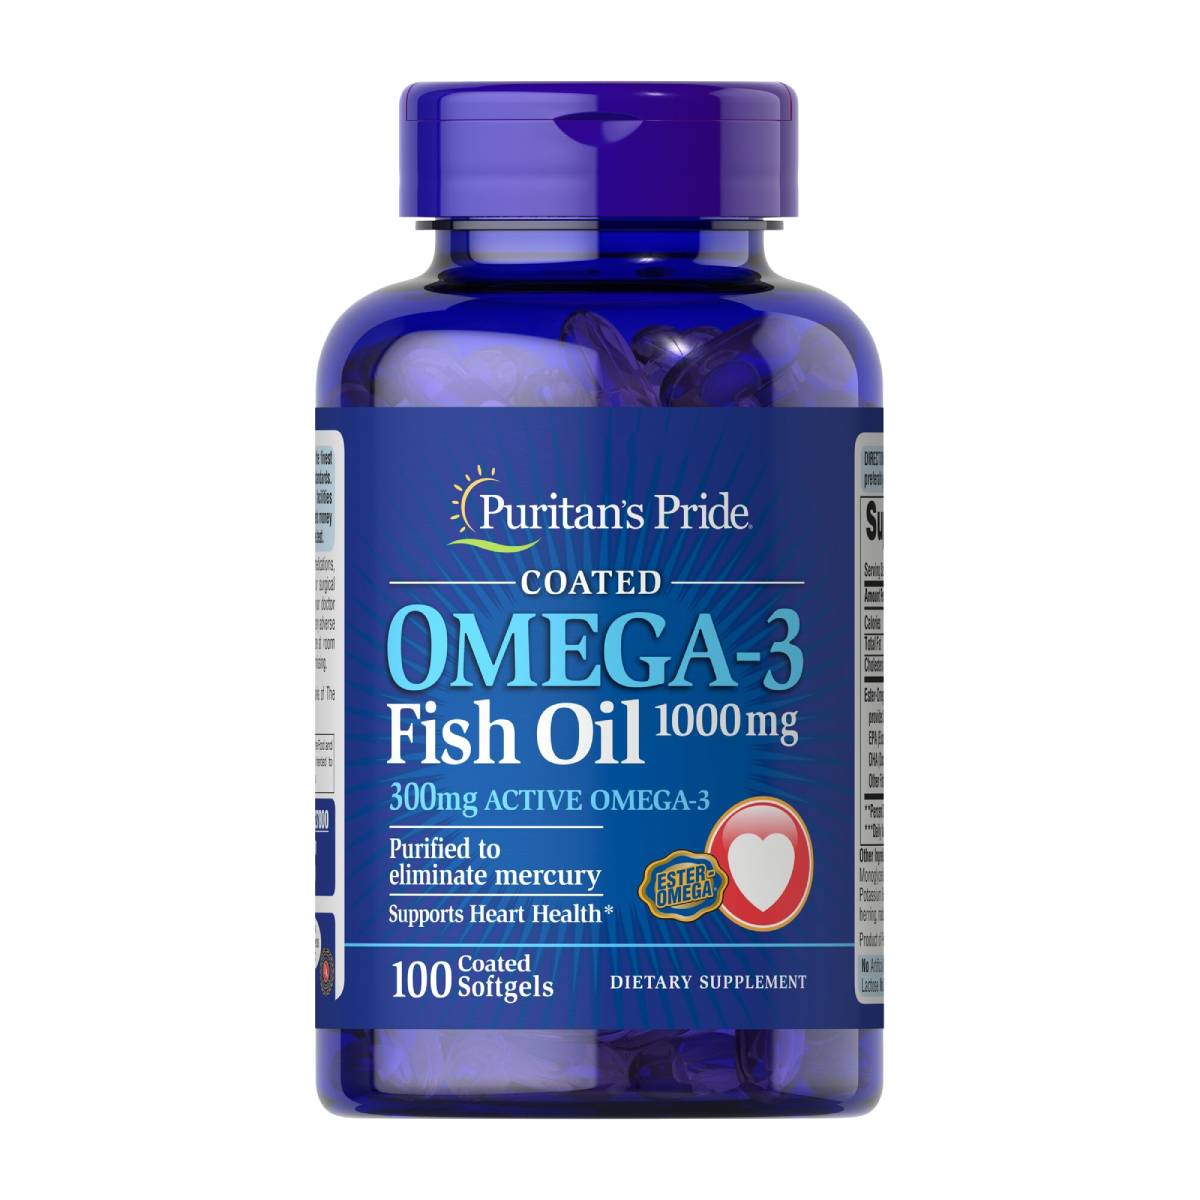 Puritan's Pride, Omega-3 Fish Oil Coated 1000 mg (300 mg Active Omega-3)